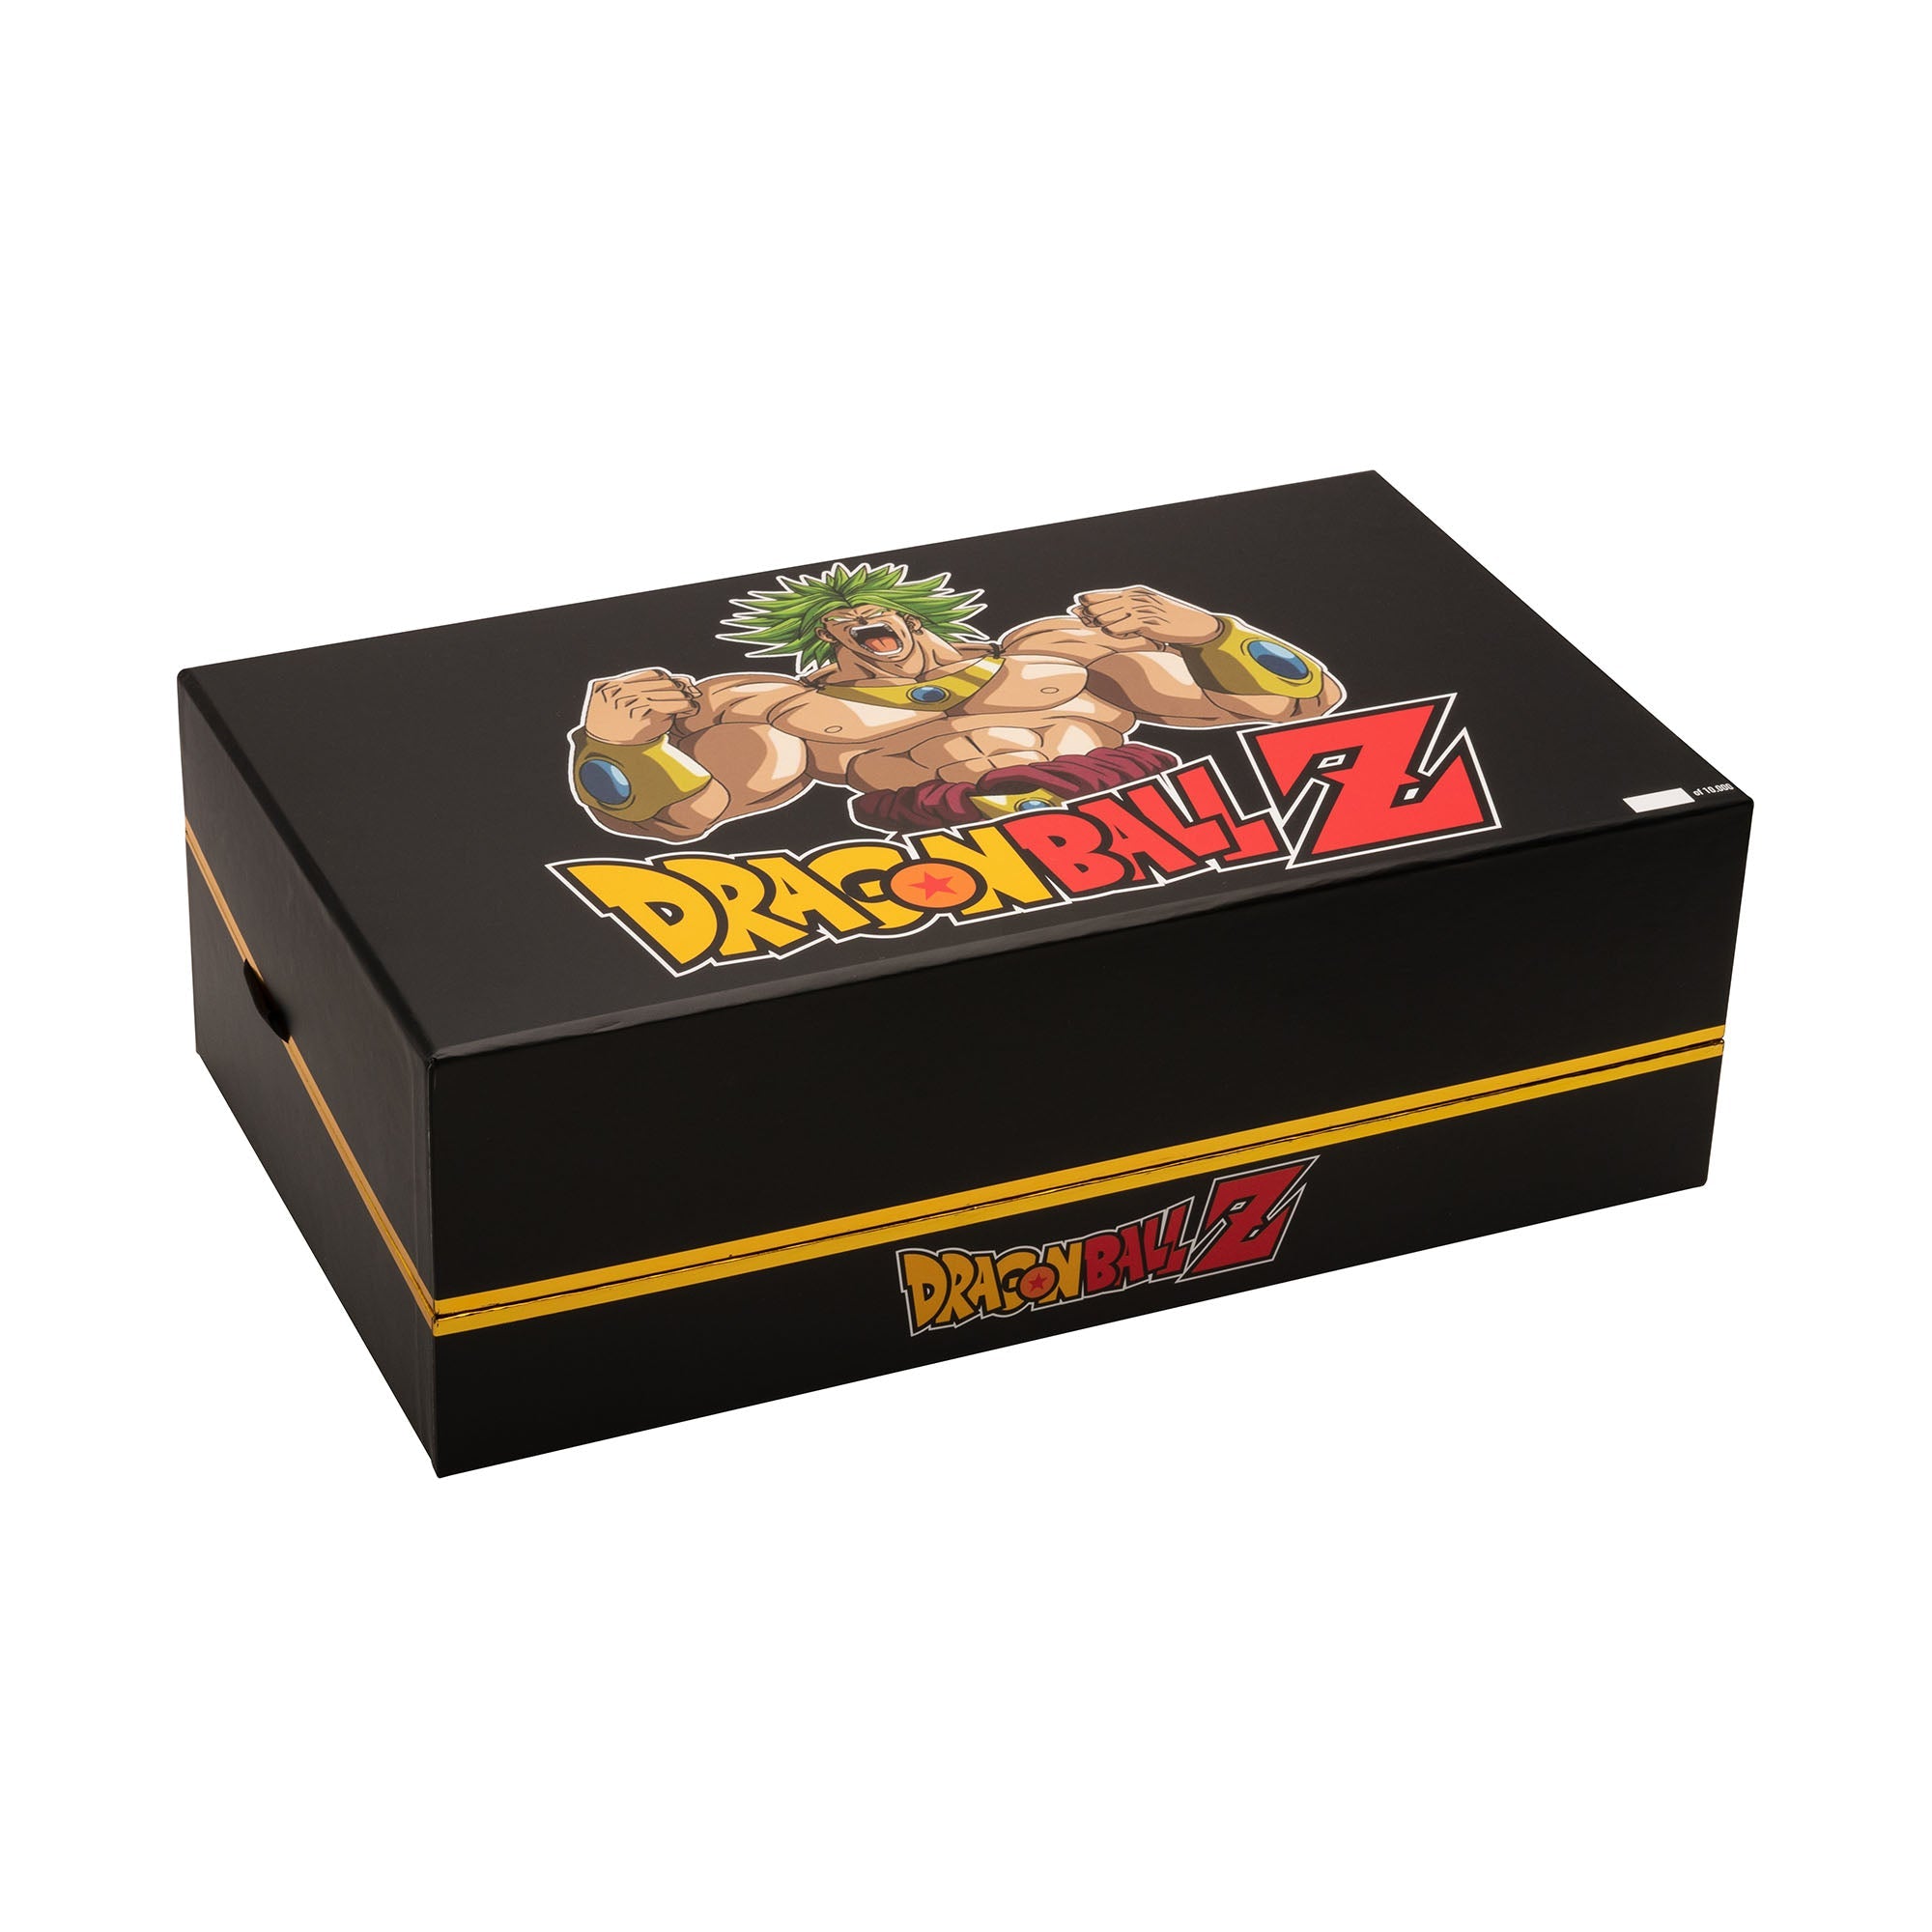 Dragon Ball Z Super Broly Collector's Box Set.